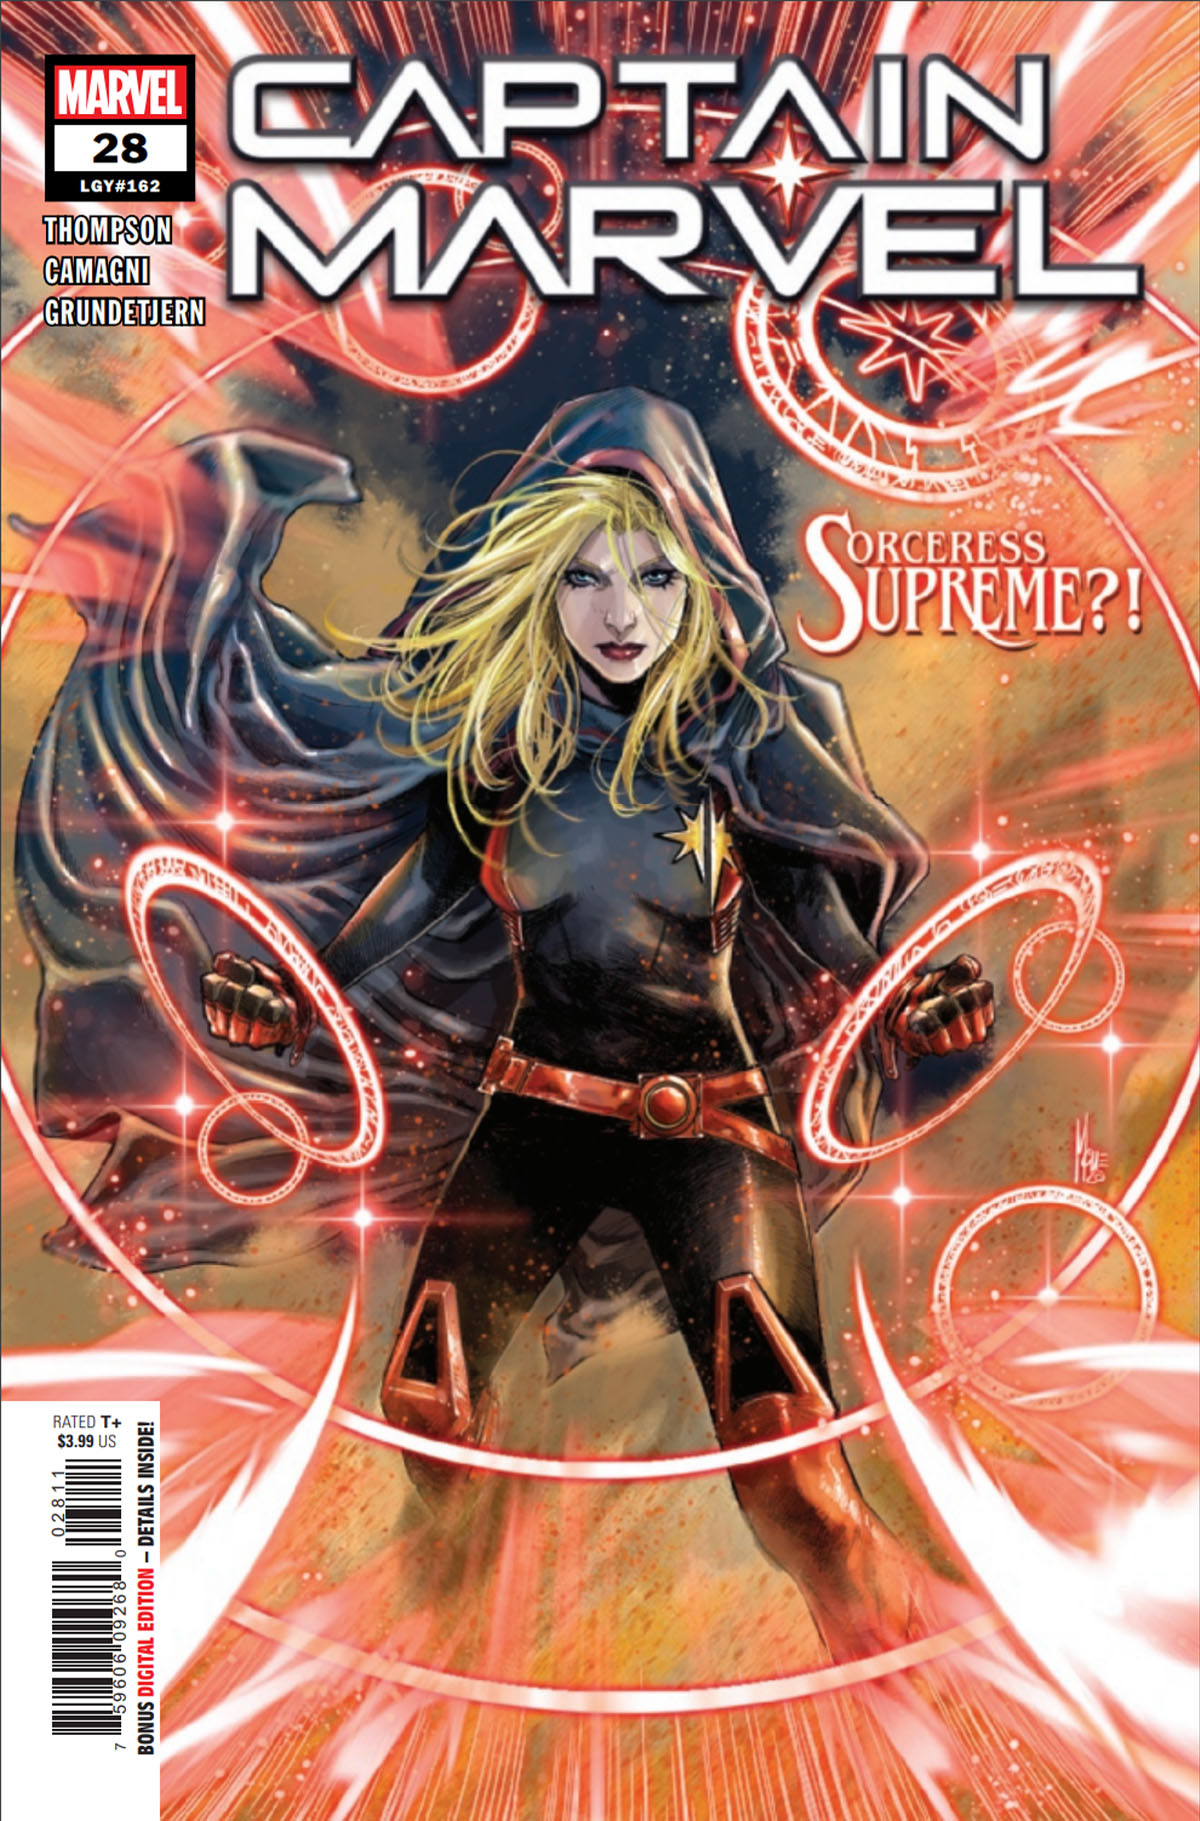 Captain Marvel #28 cover